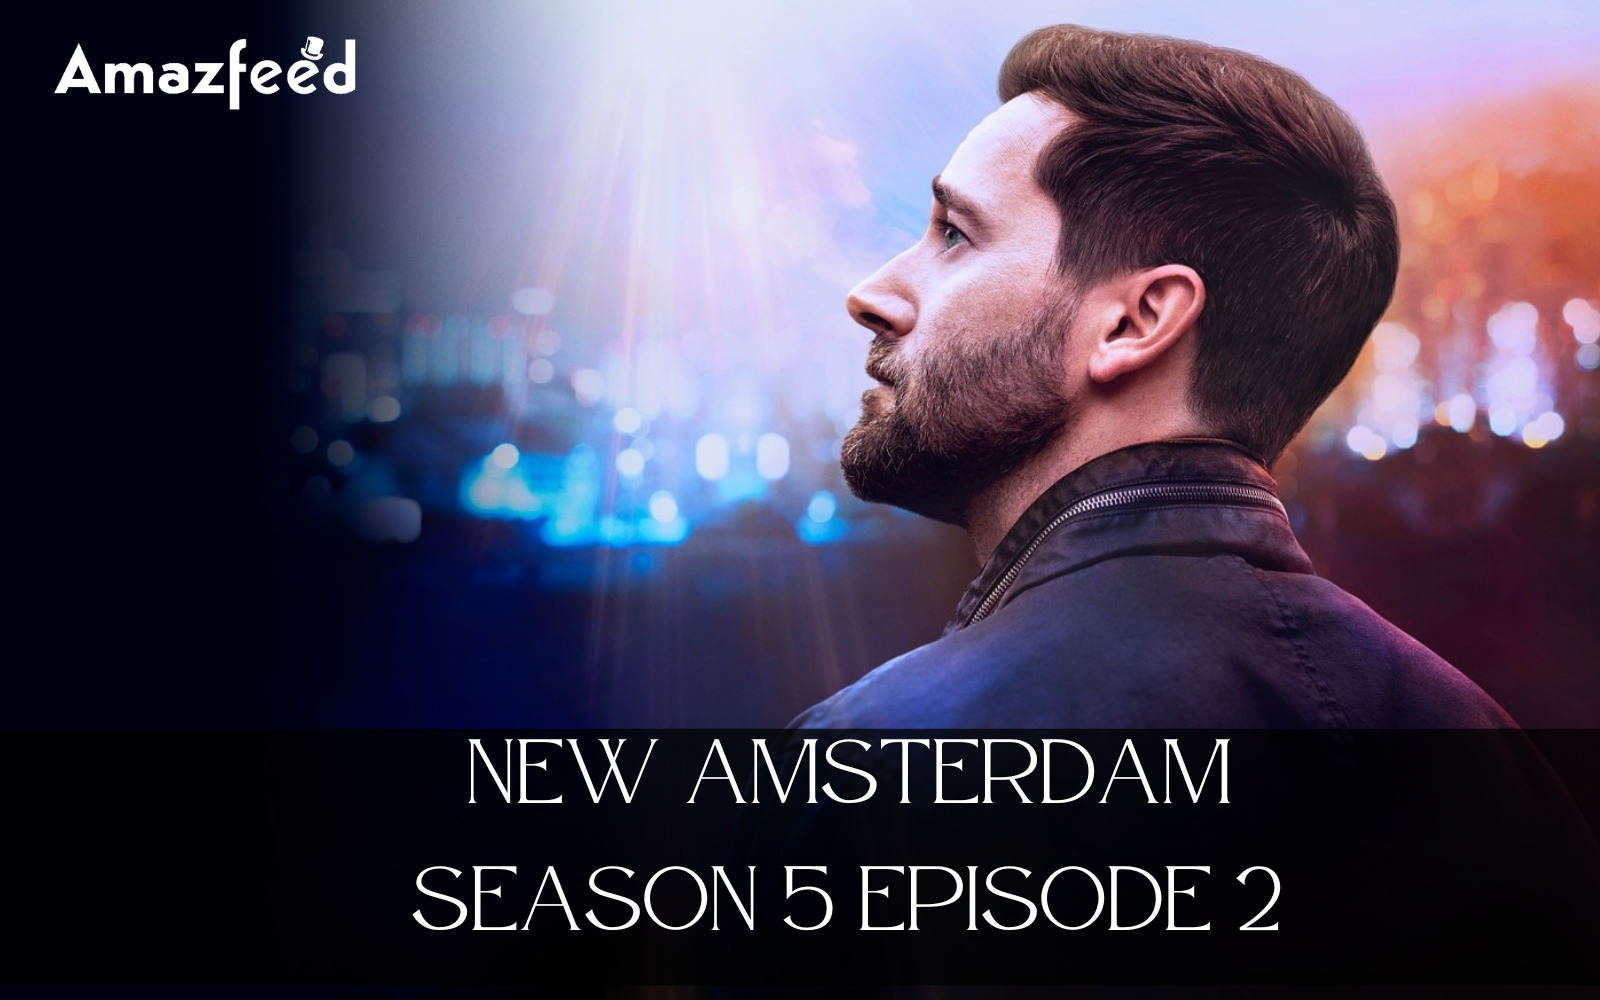 New Amsterdam Season 5 Episode 2 Spoiler